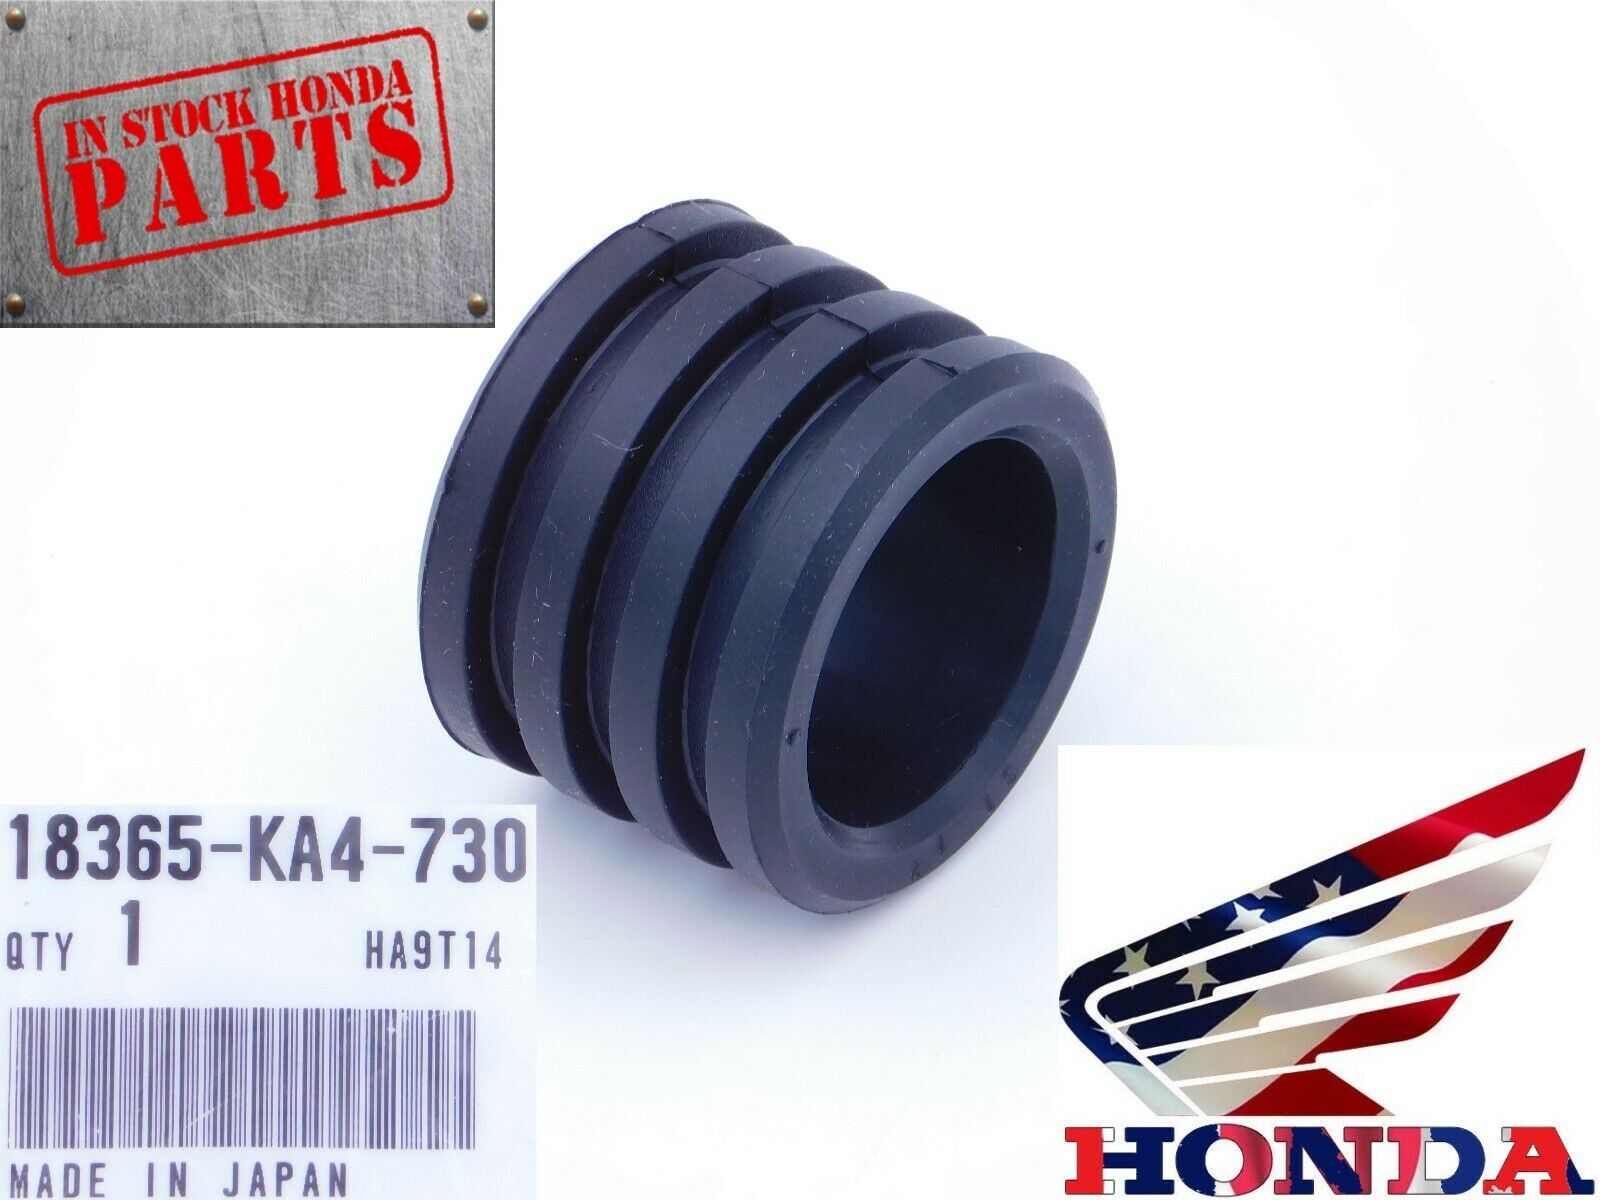 Honda Oem Exhaust Pipe To Muffler Rubber Seal / Gasket 1986-2007 Cr 250 Cr250r